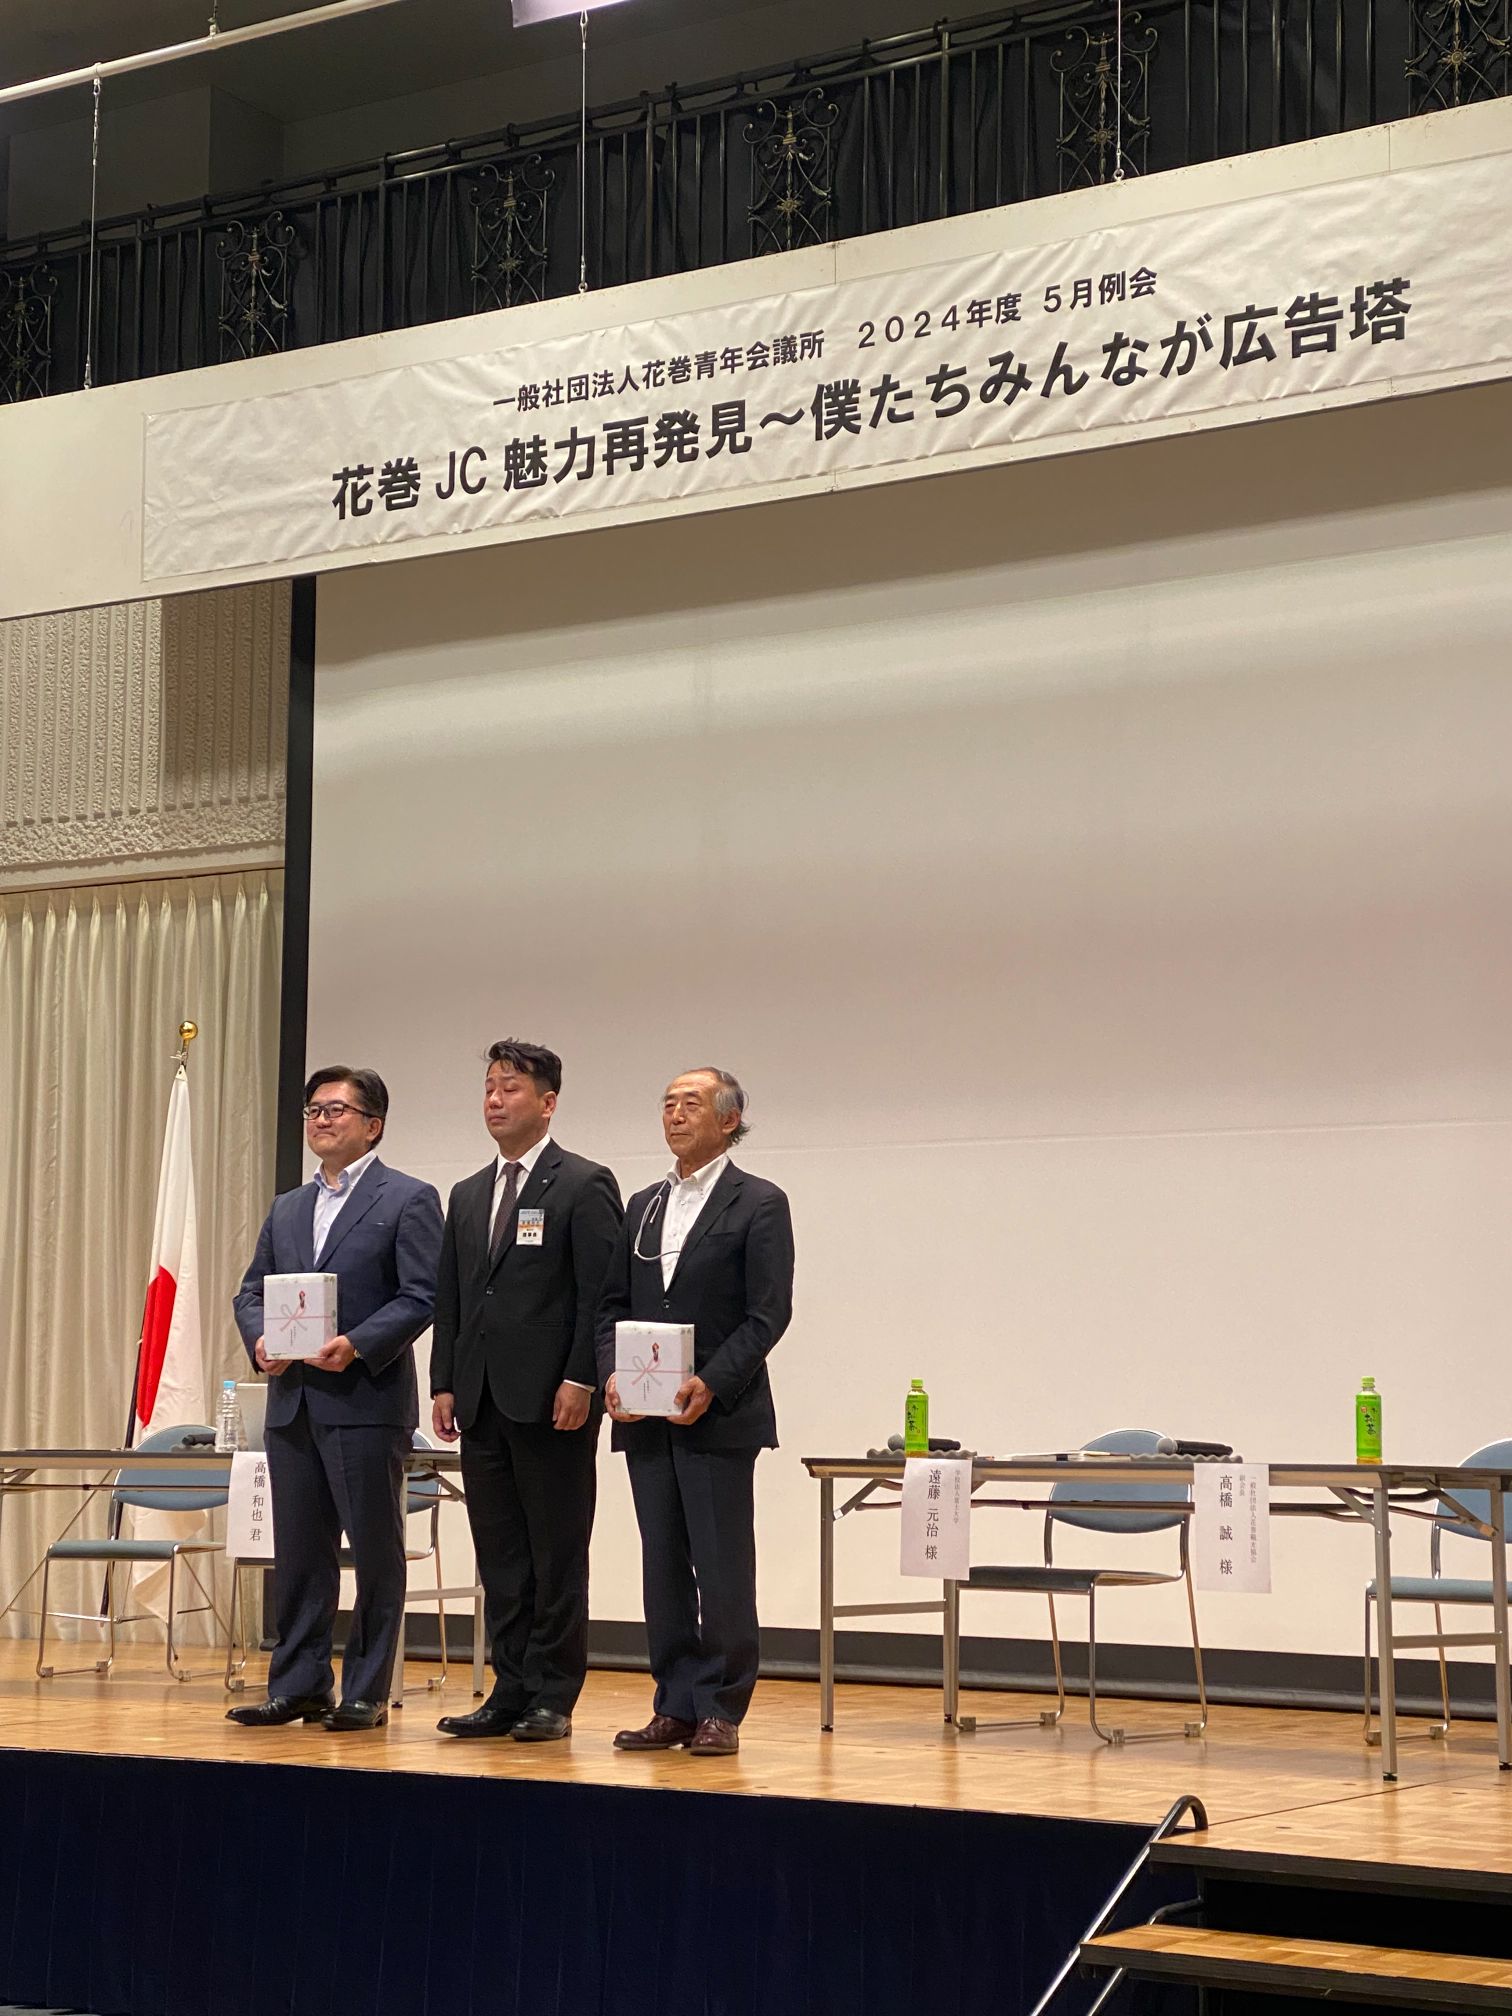 左から高橋社長、高橋理事長、遠藤先生